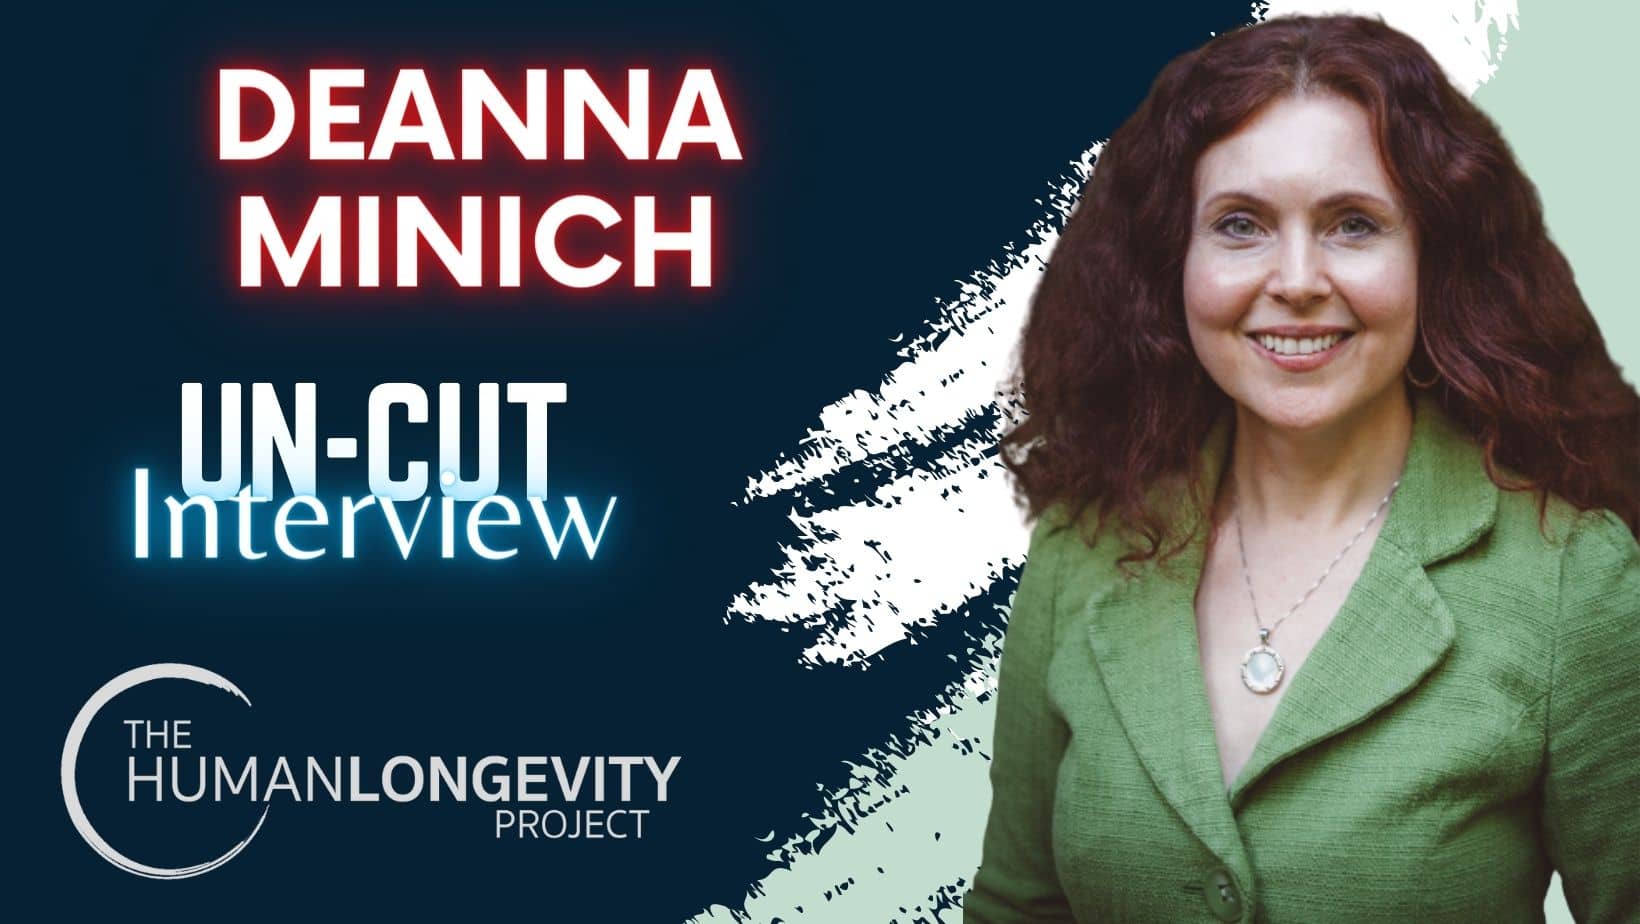 Human Longevity Project Uncut Interview With Dr. Deanna Minich